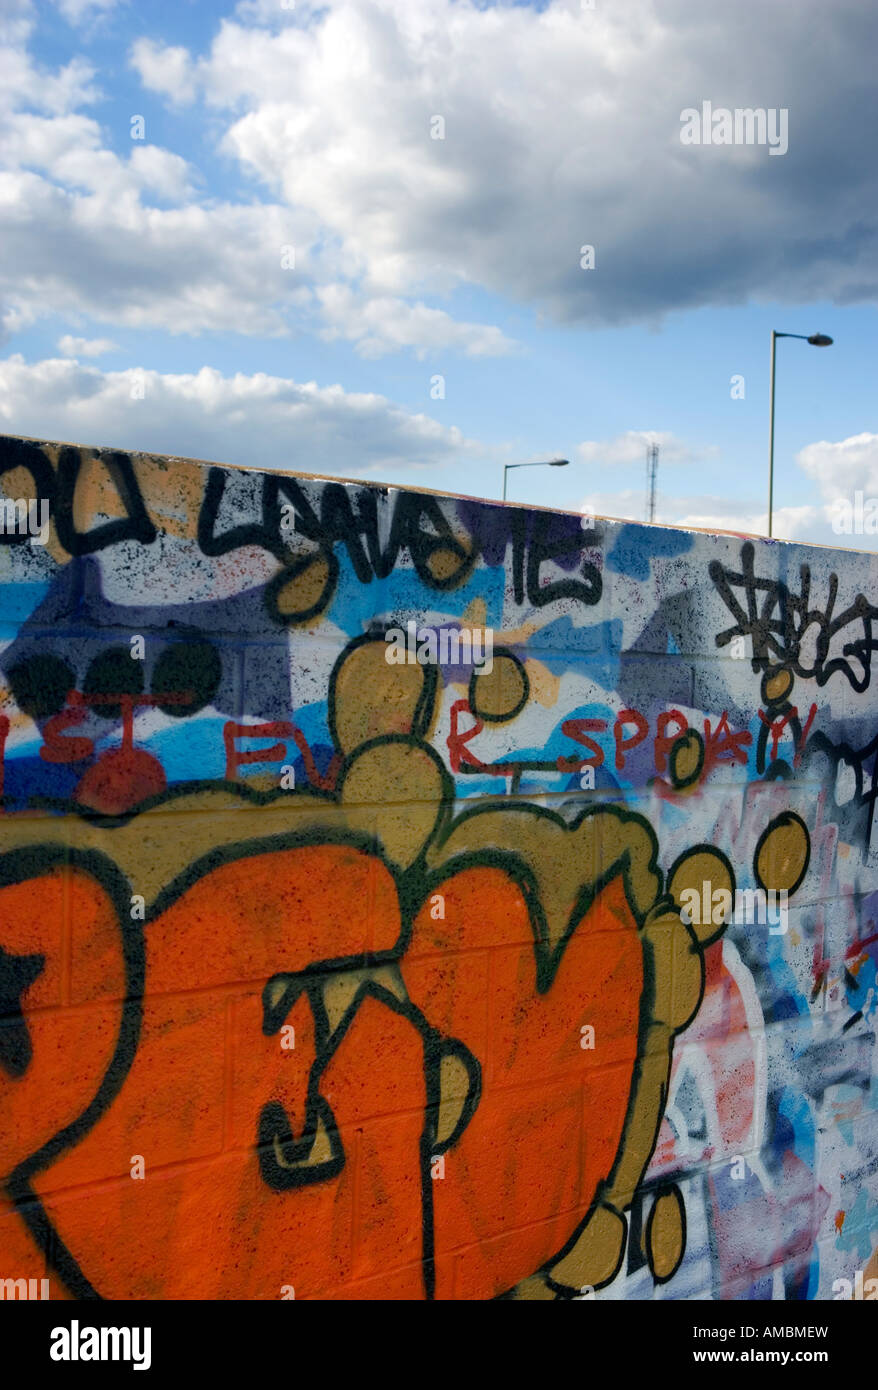 Spray can graffiti on an urban wall Stock Photo